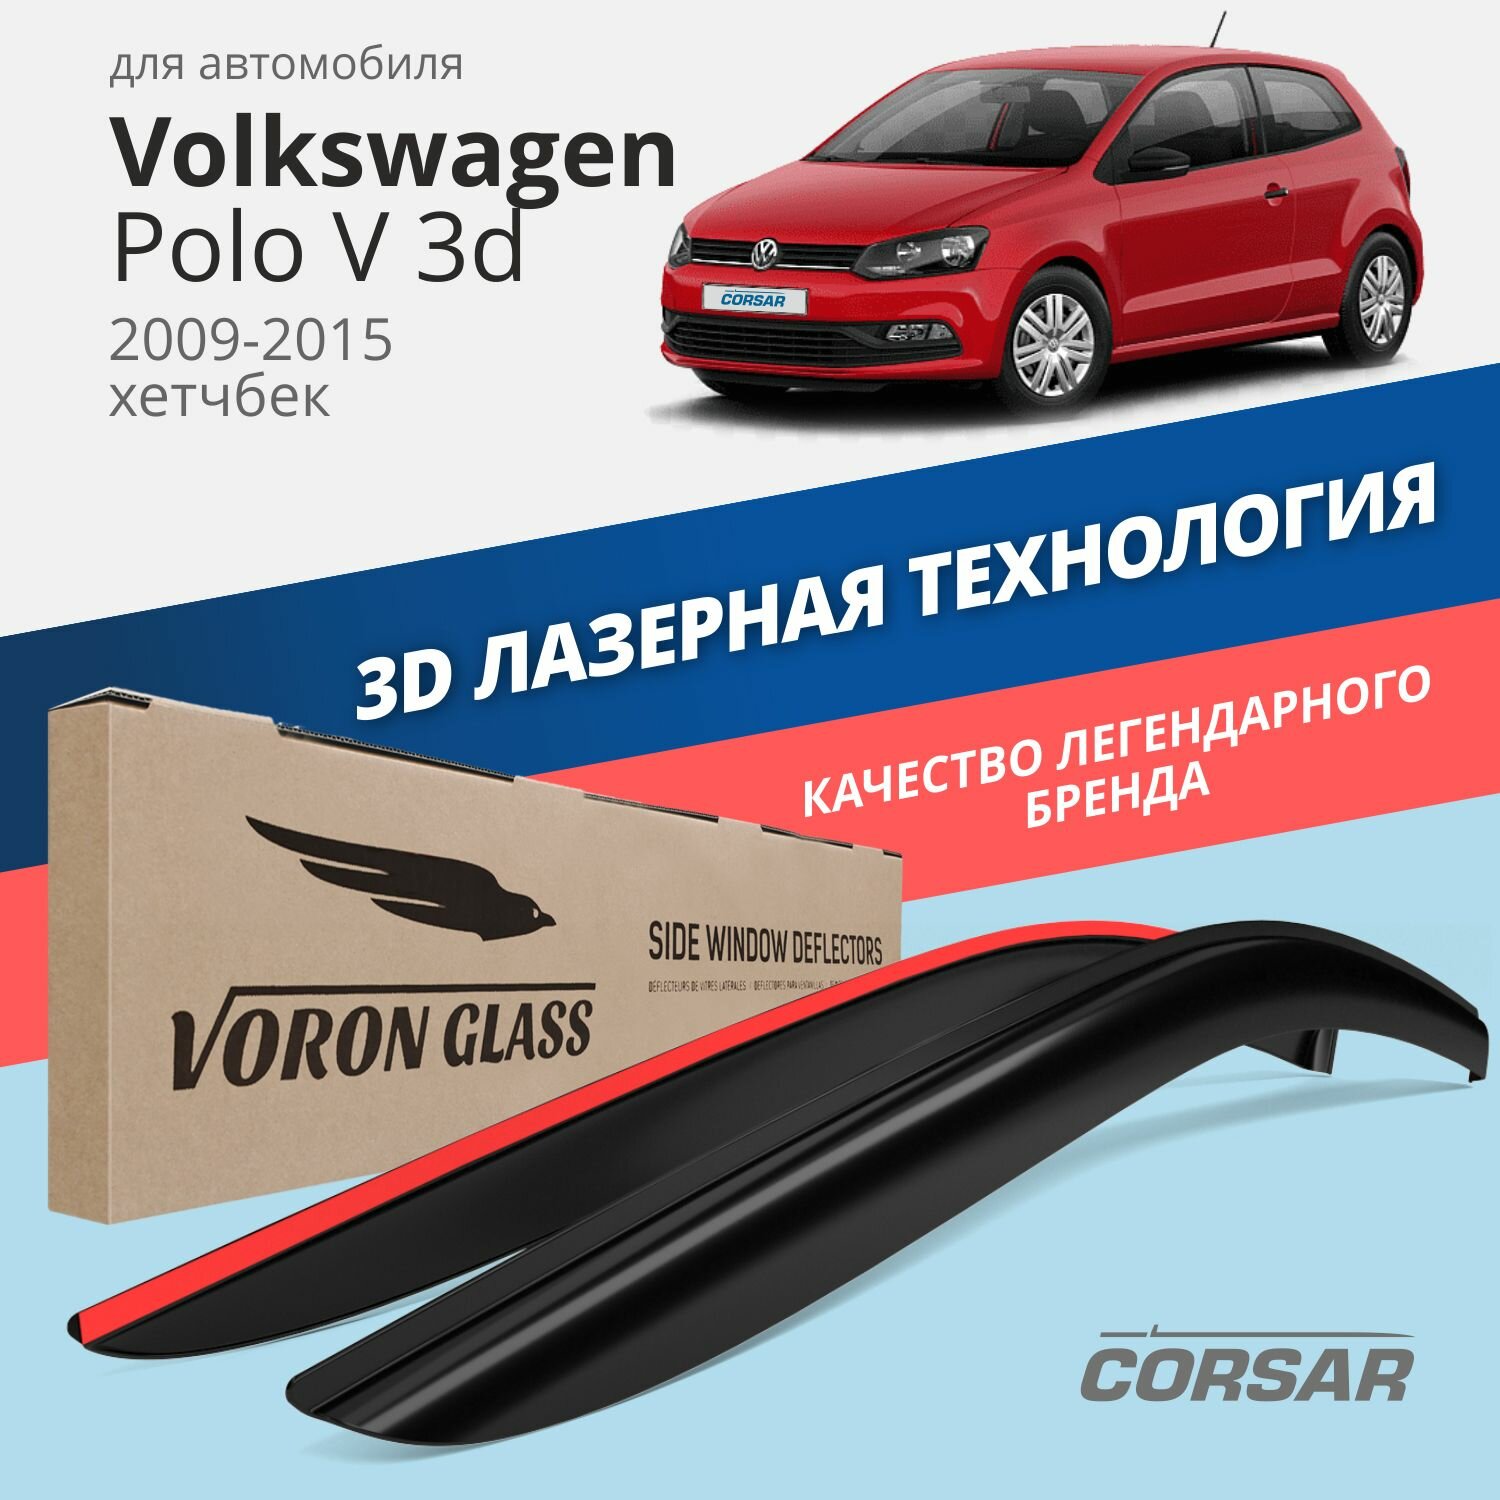 Дефлекторы окон Voron Glass серия Corsar для Volkswagen Polo V 3d 2009-2015 хэтчбек накладные 2 шт.